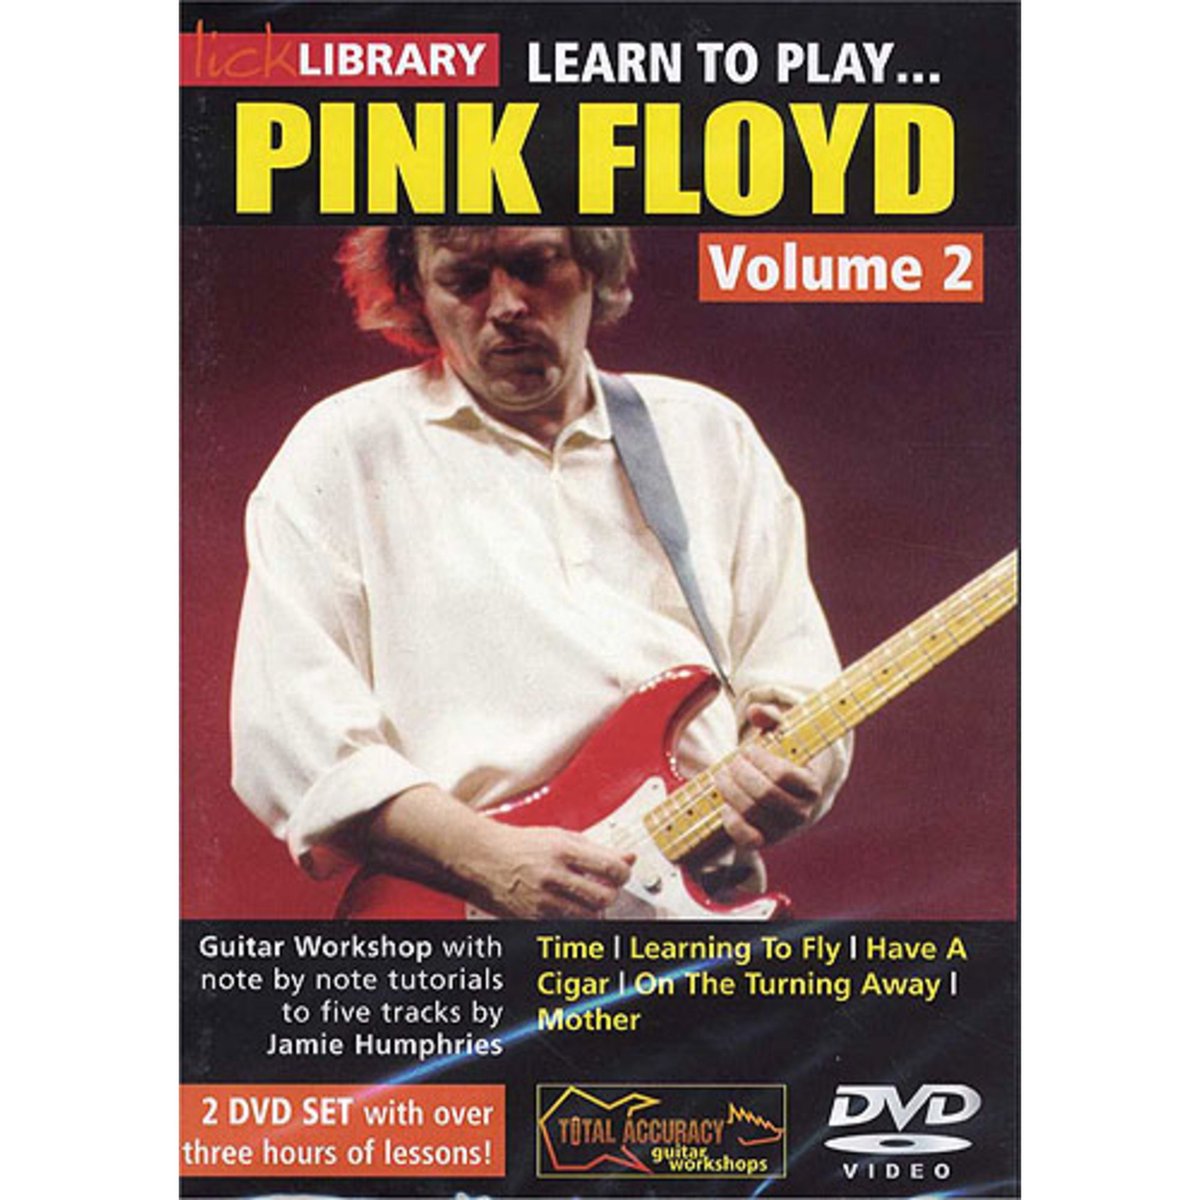 Roadrock International Lick Library - Pink Floyd 2 Learn to play (gitaar), DVD - DVD / CD / Multimedia: O - P